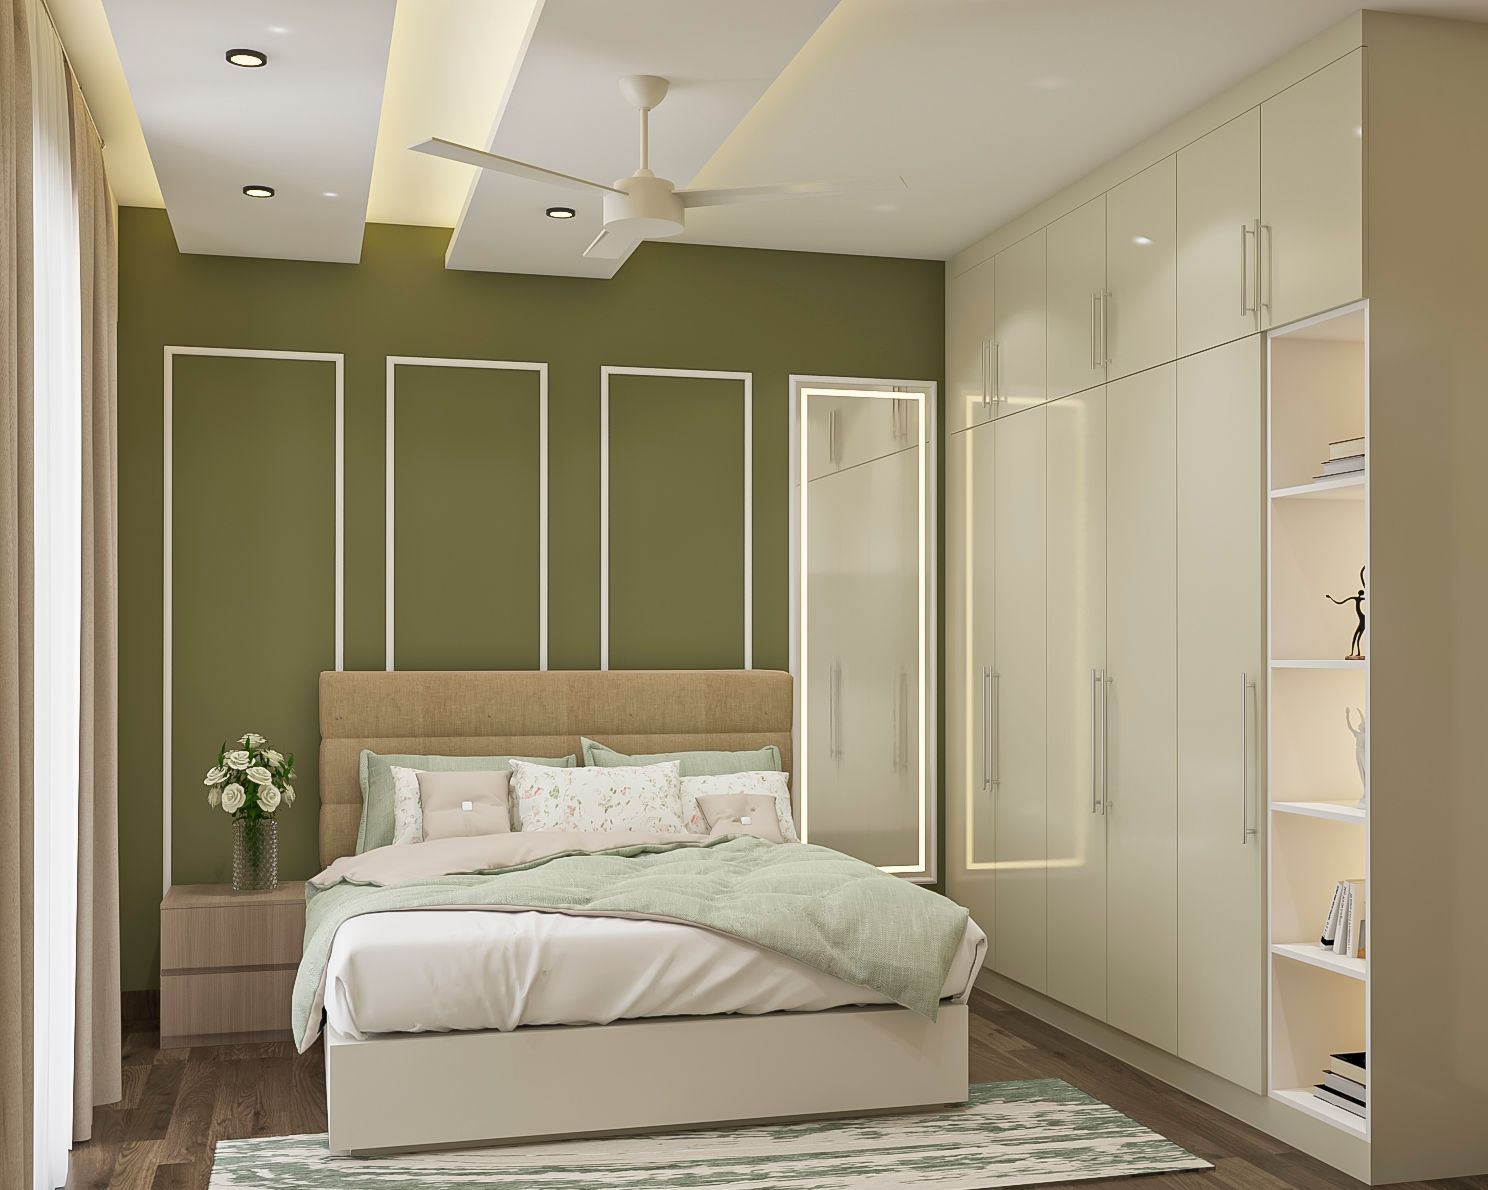 Gypsum Modern Parallel Bedroom Ceiling Design In White